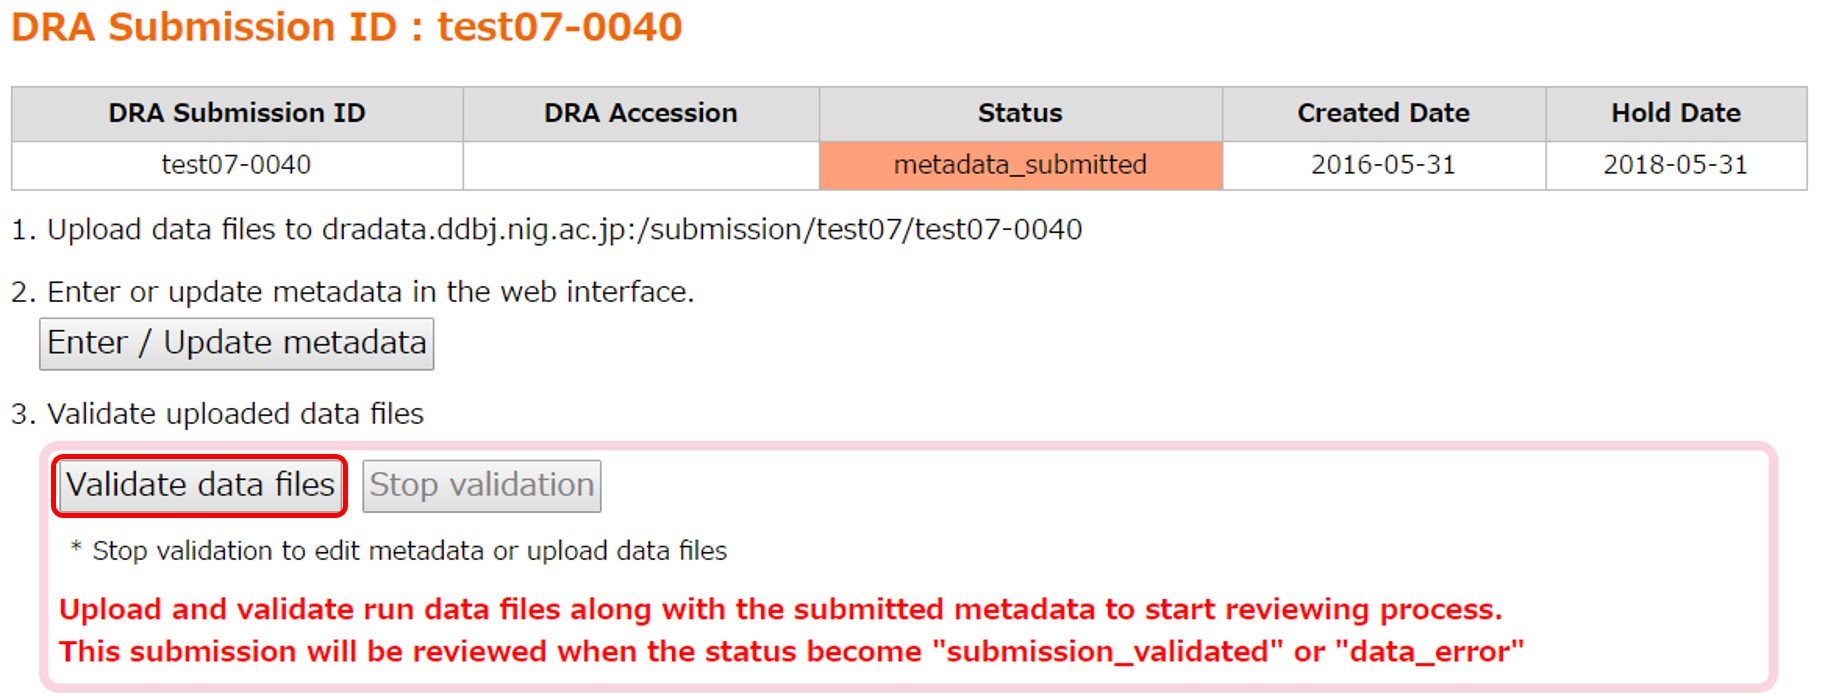 UStart validationo of data files